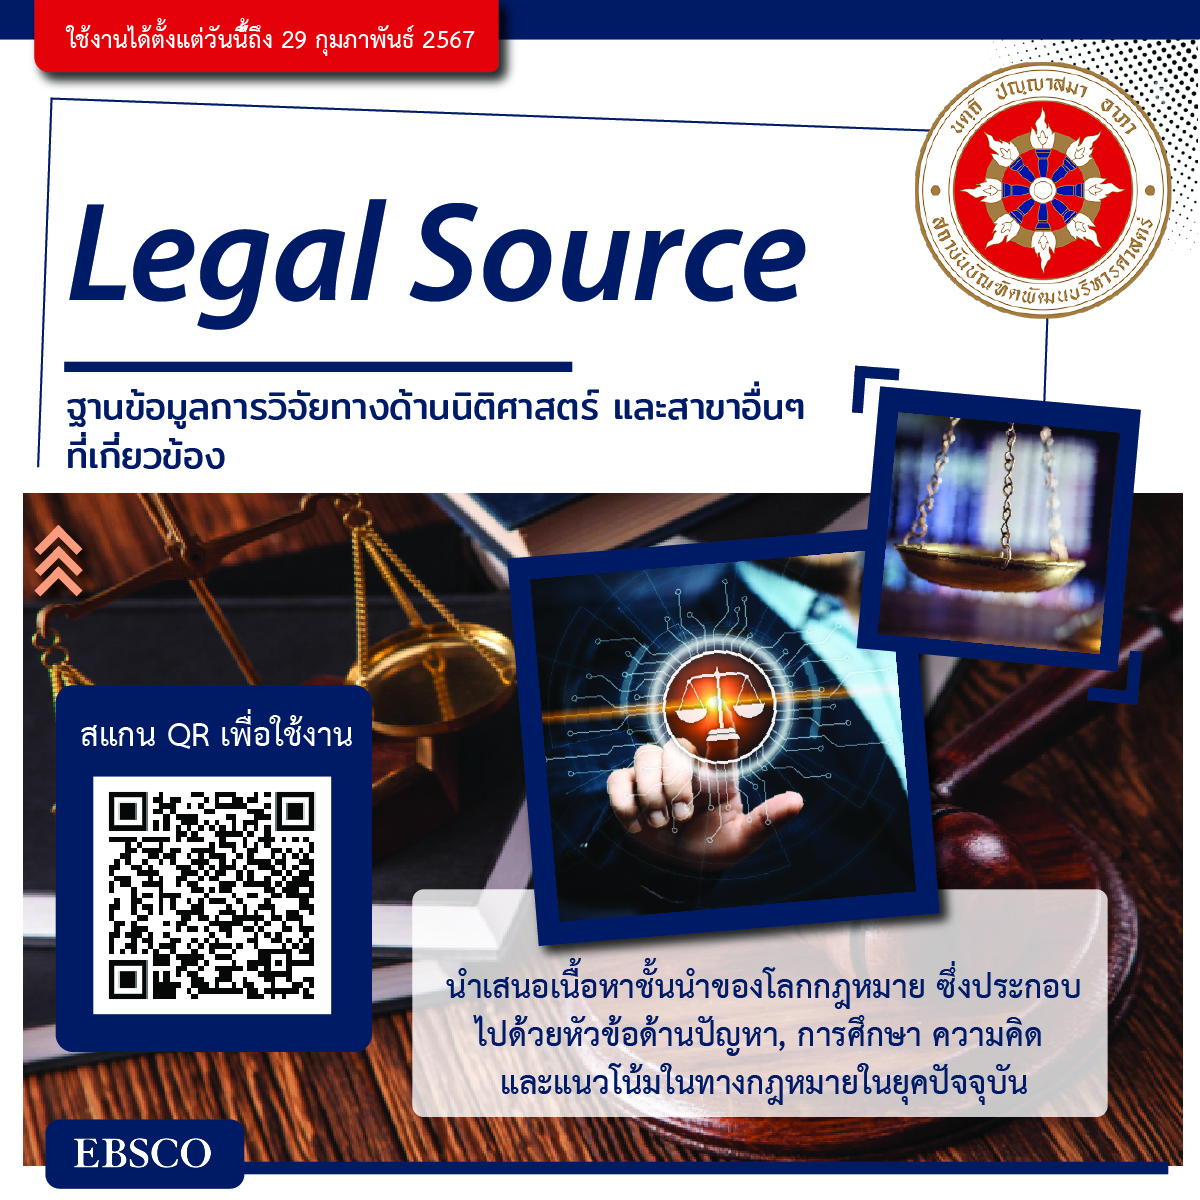 NIDA_Legal Source_202302